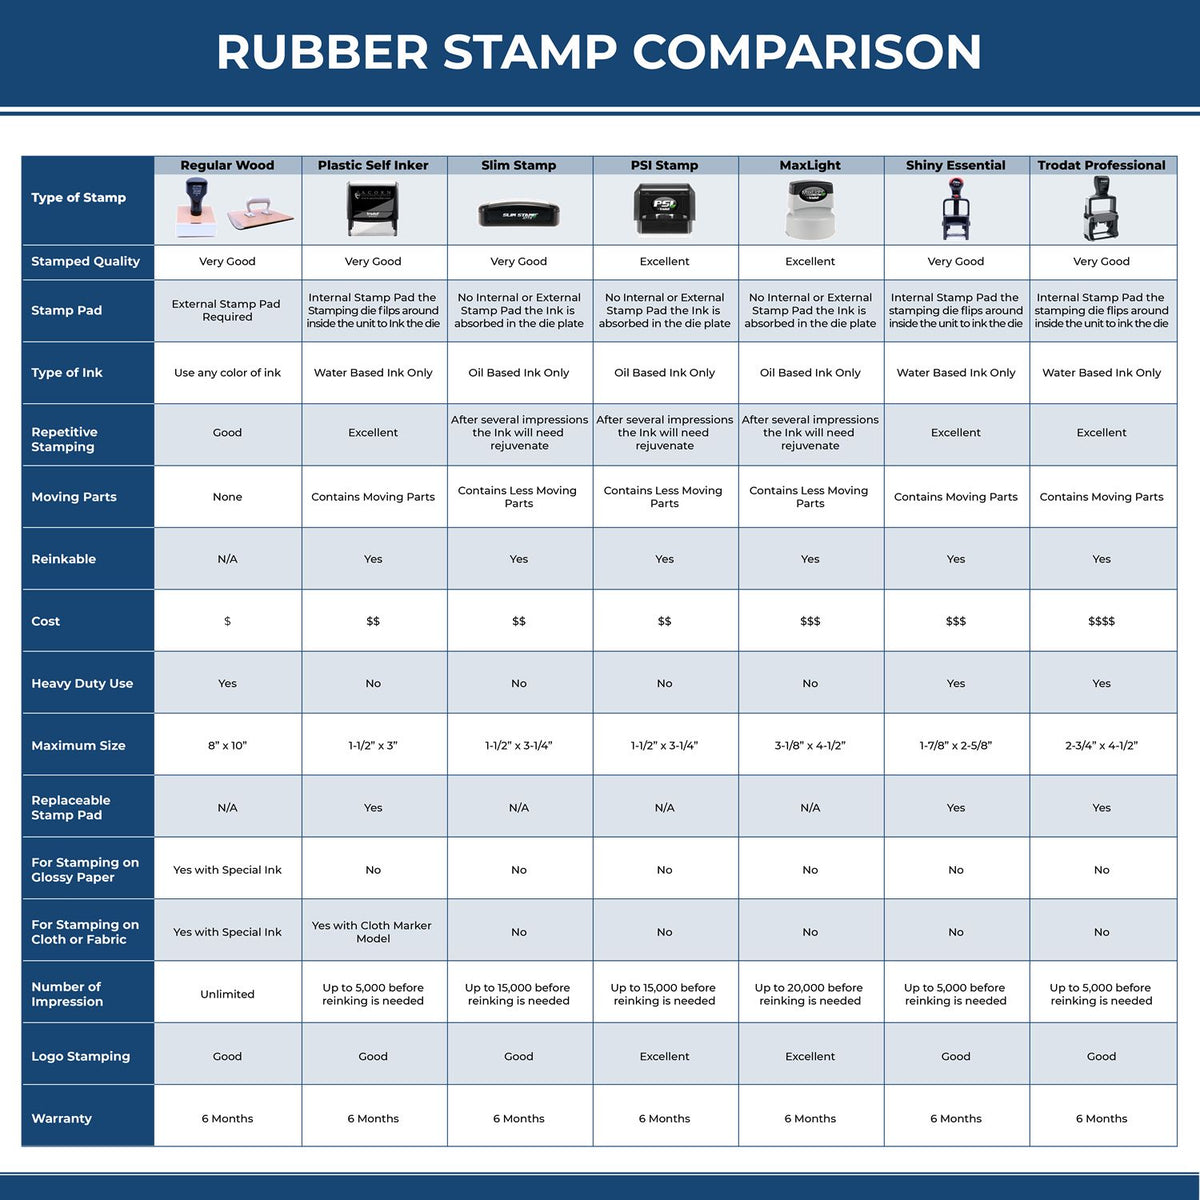 Large Parcel Post Air Rubber Stamp 4911R Rubber Stamp Comparison